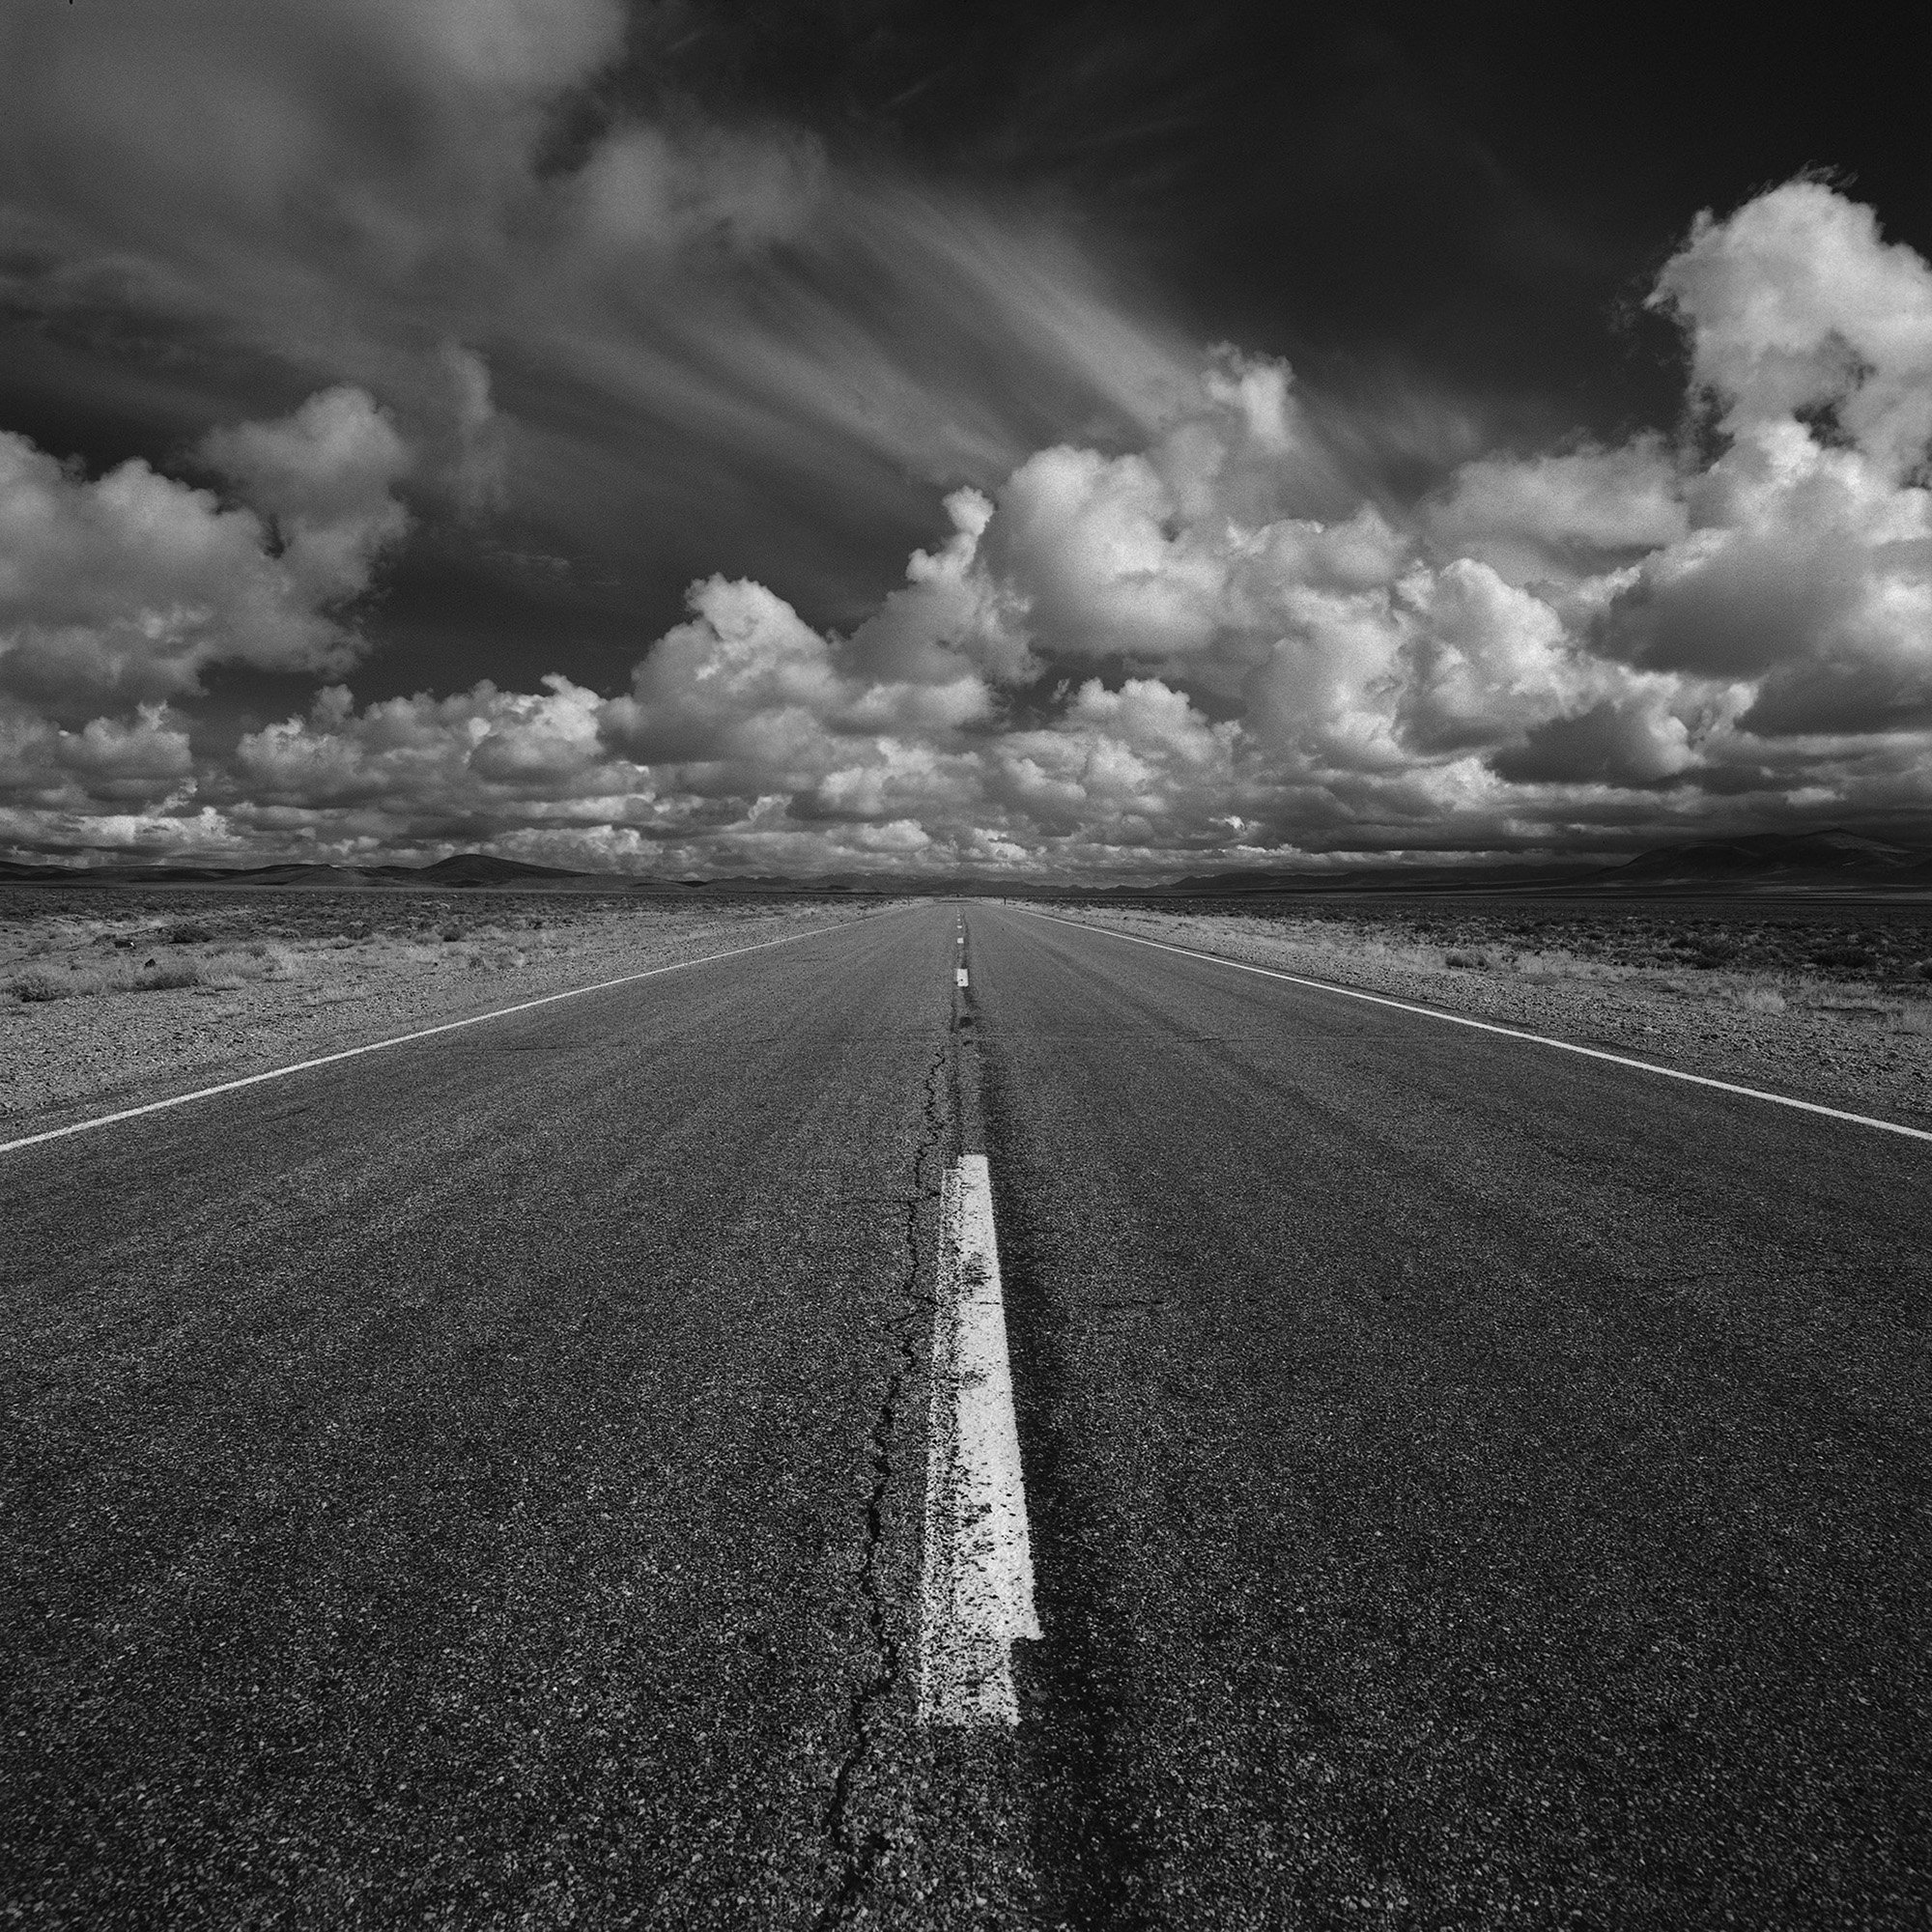  Highway 376. Nevada. April 10, 2016 